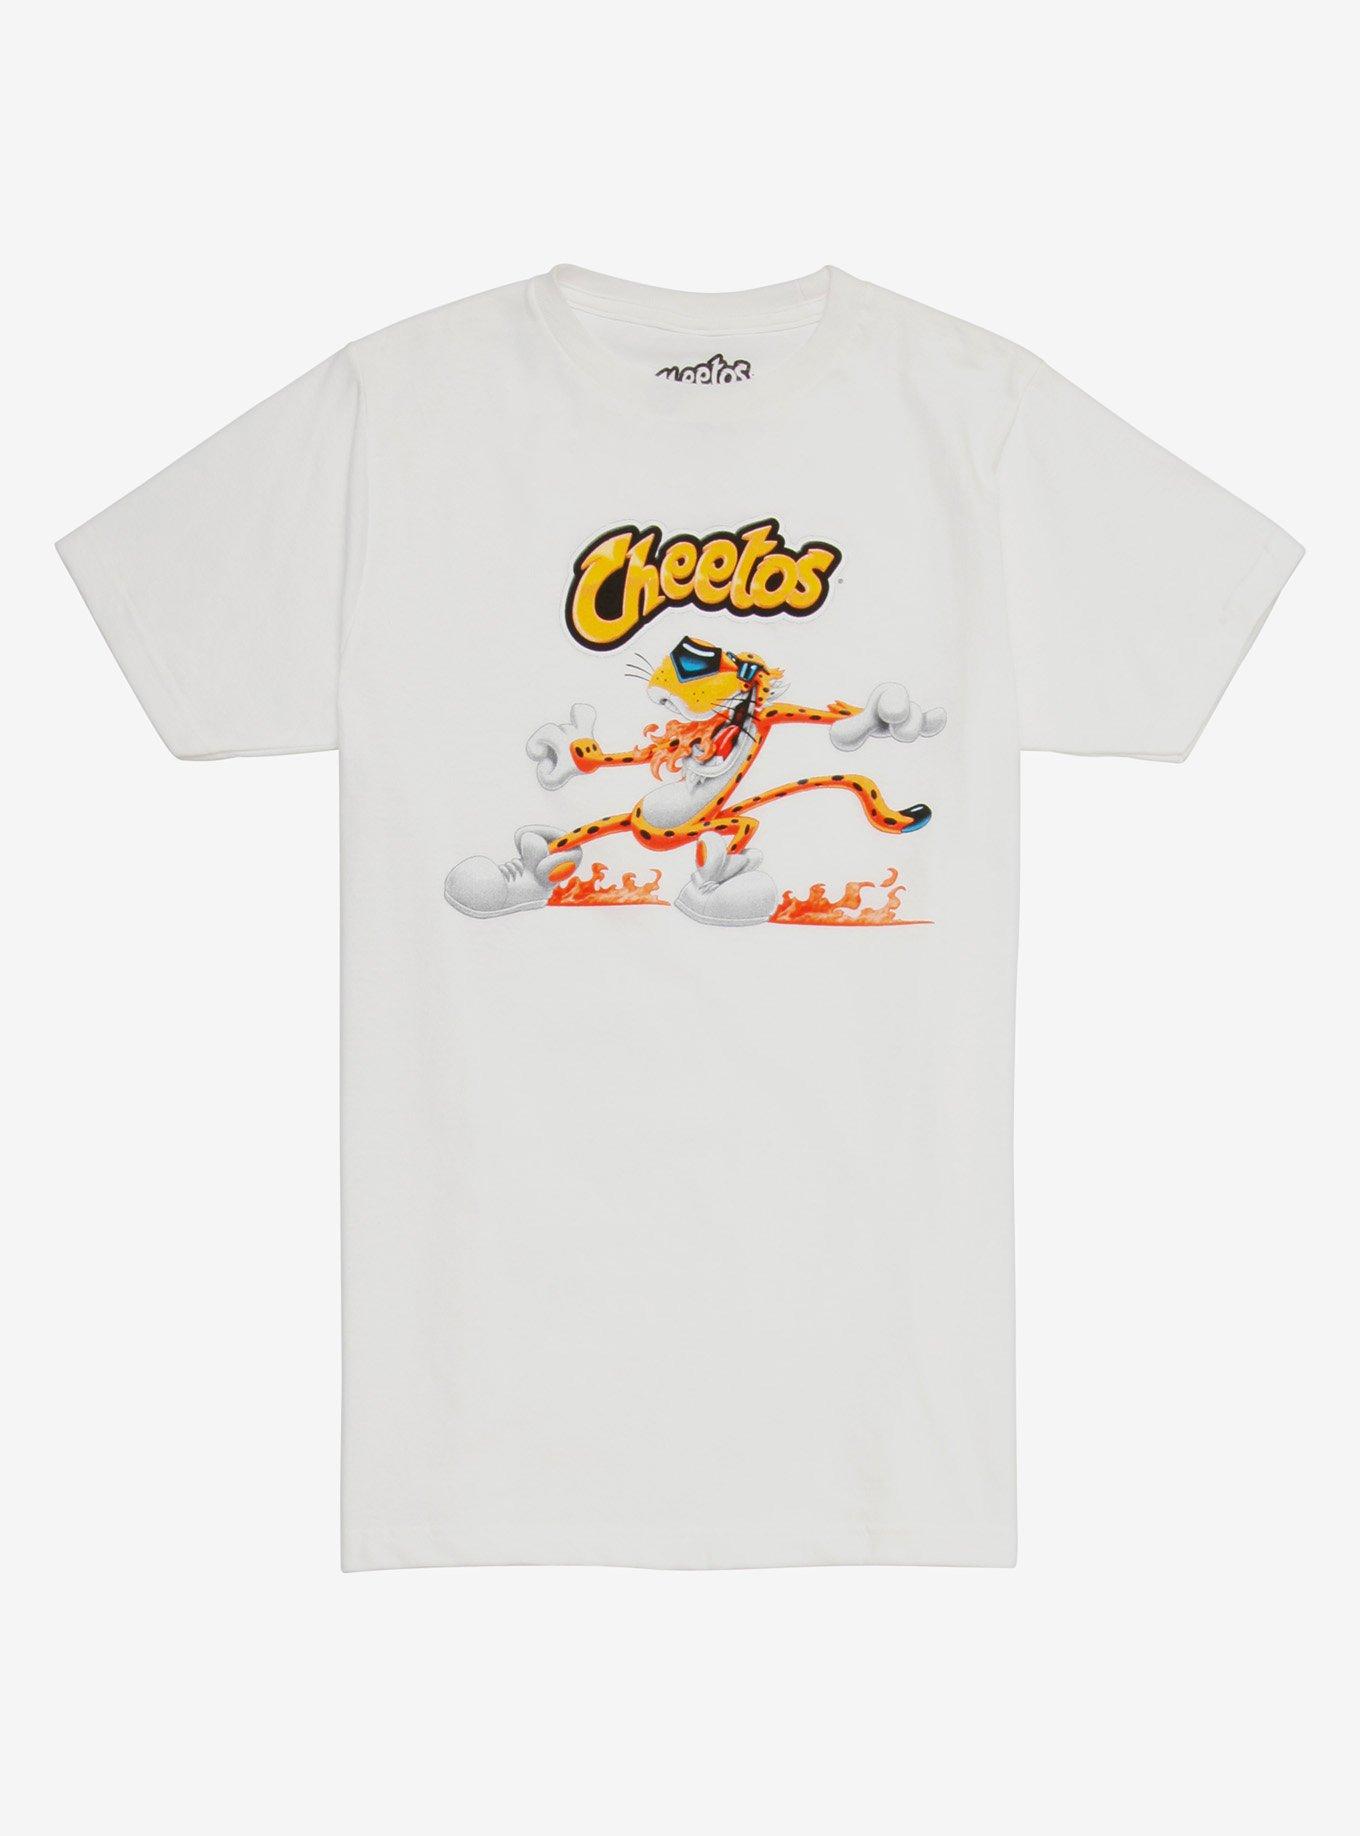 Cheetos Chester Flamin' Hot Girls T-Shirt, MULTI, hi-res